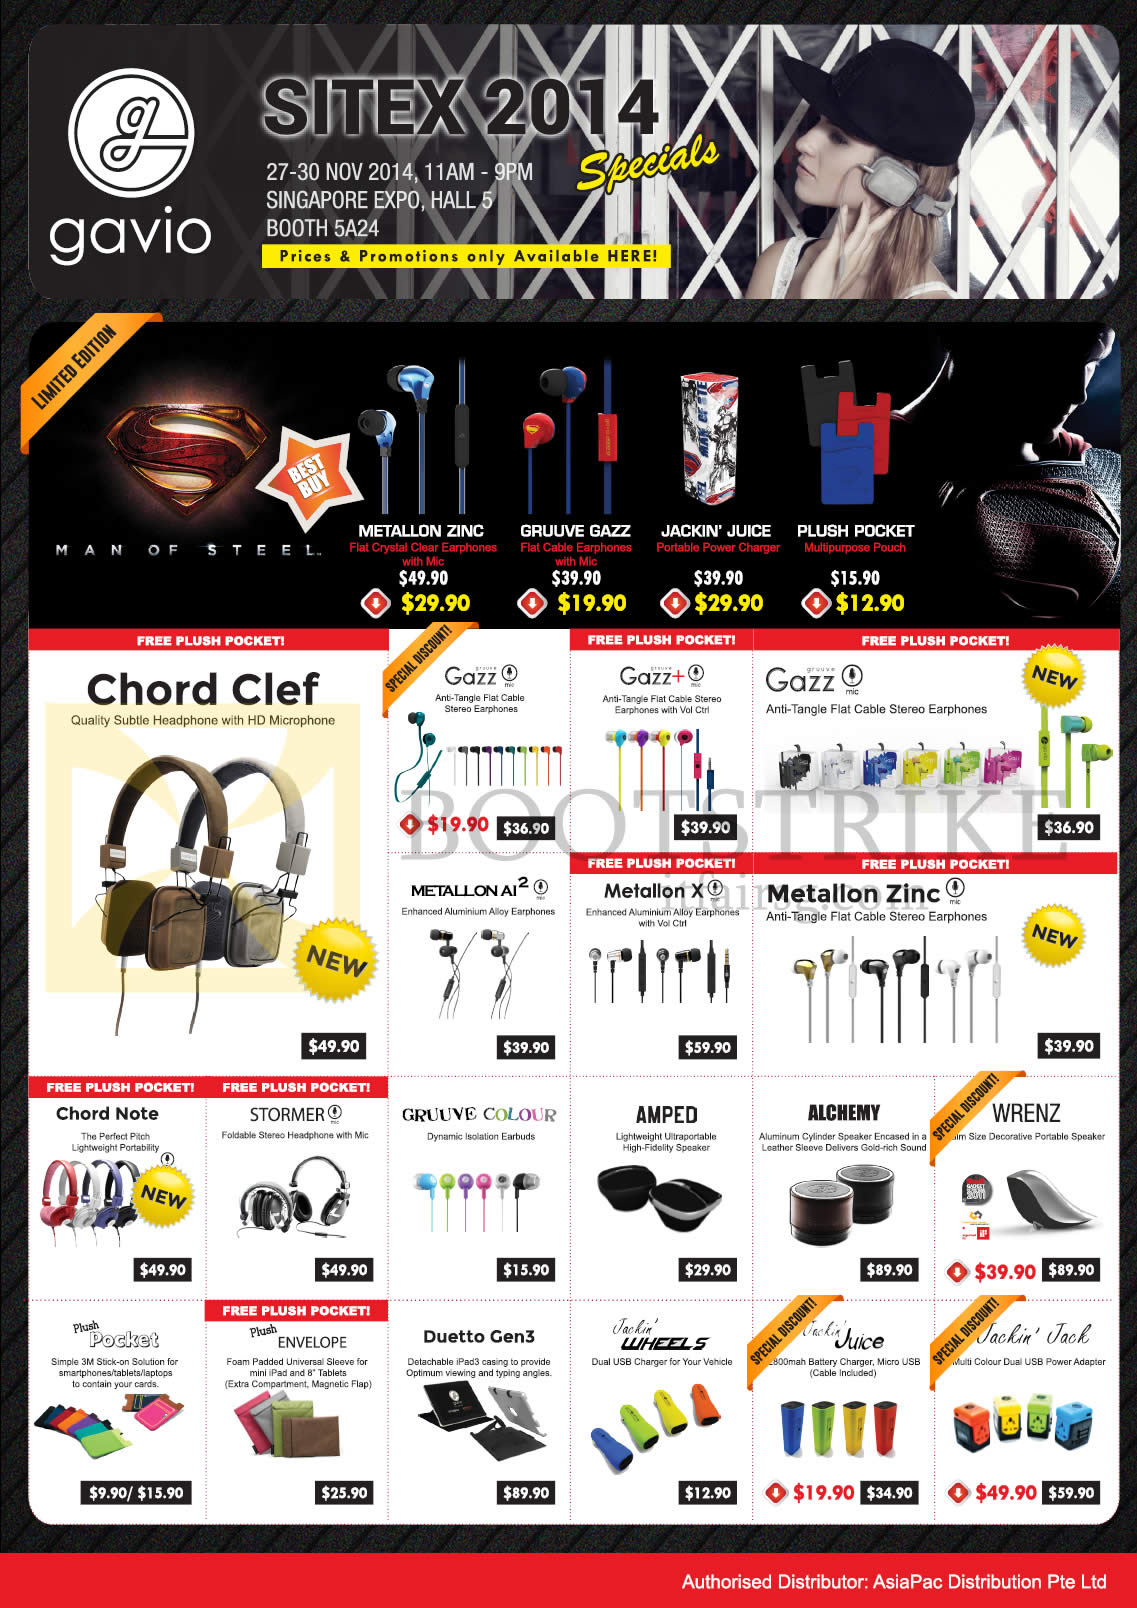 SITEX 2014 price list image brochure of Newstead Gavio Headphones, Earphones, Speakers, USB Chargers, Chord Clef, Gazz, Metallon AI2, Amped, Wrenz, Stormer